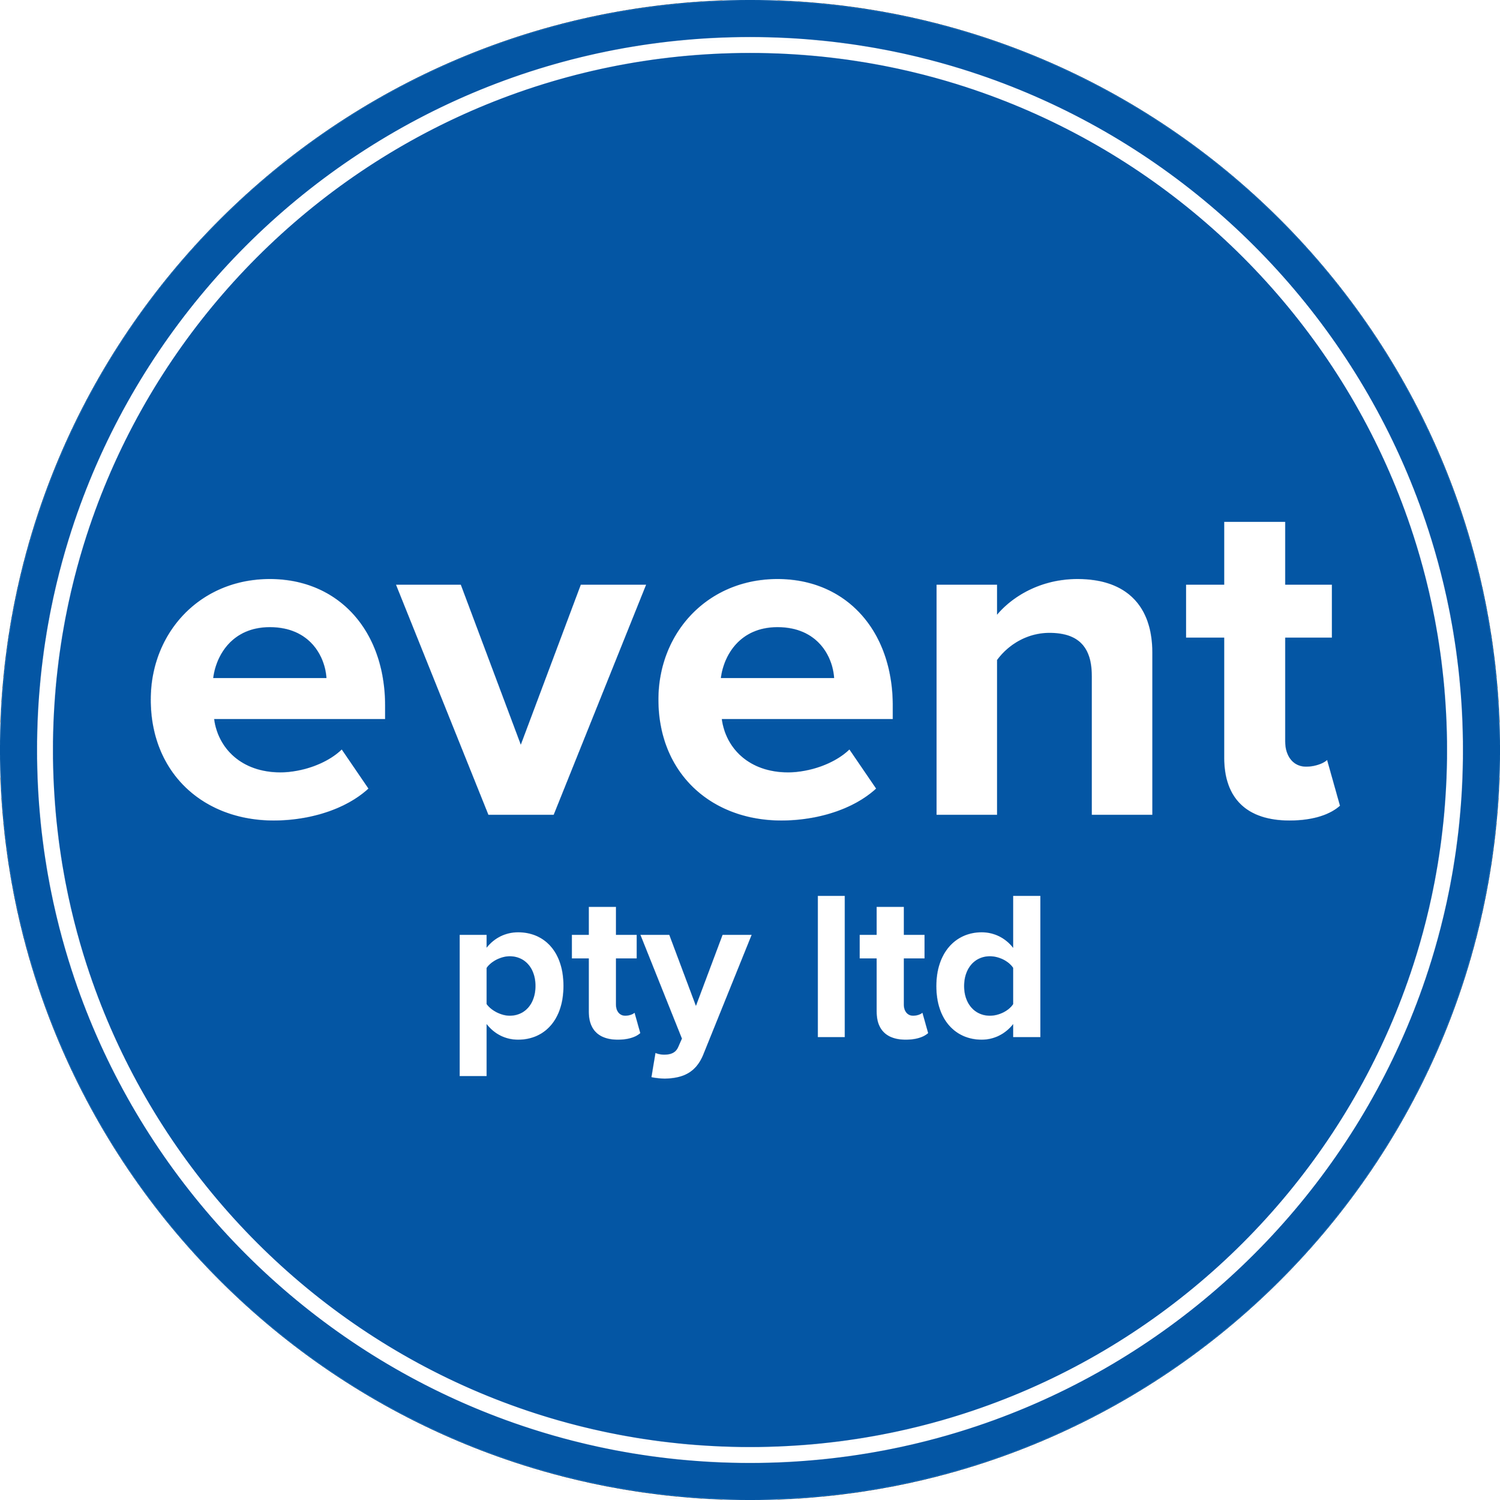 Event Pty Ltd